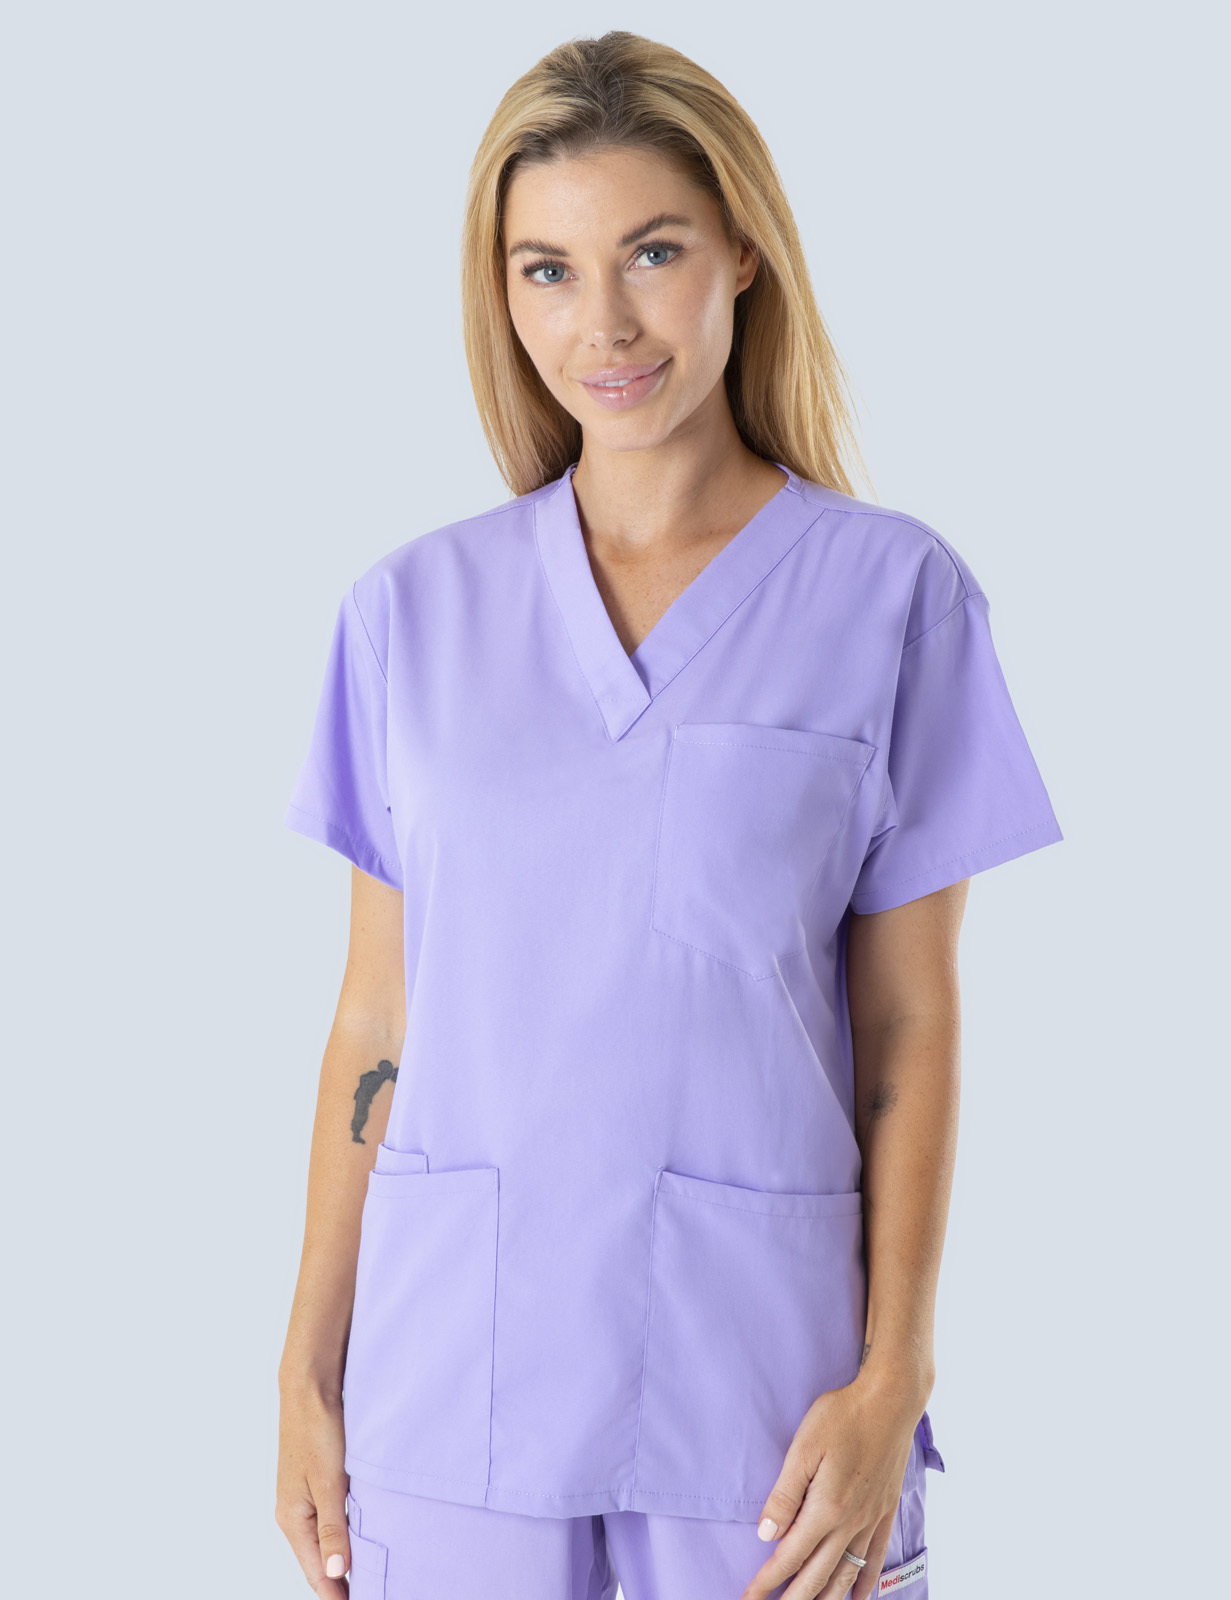 Queensland Children's Hospital Emergency Department Assistant in Nursing  Uniform Top Bundle  (4 Pocket Top in Lilac incl Logos)